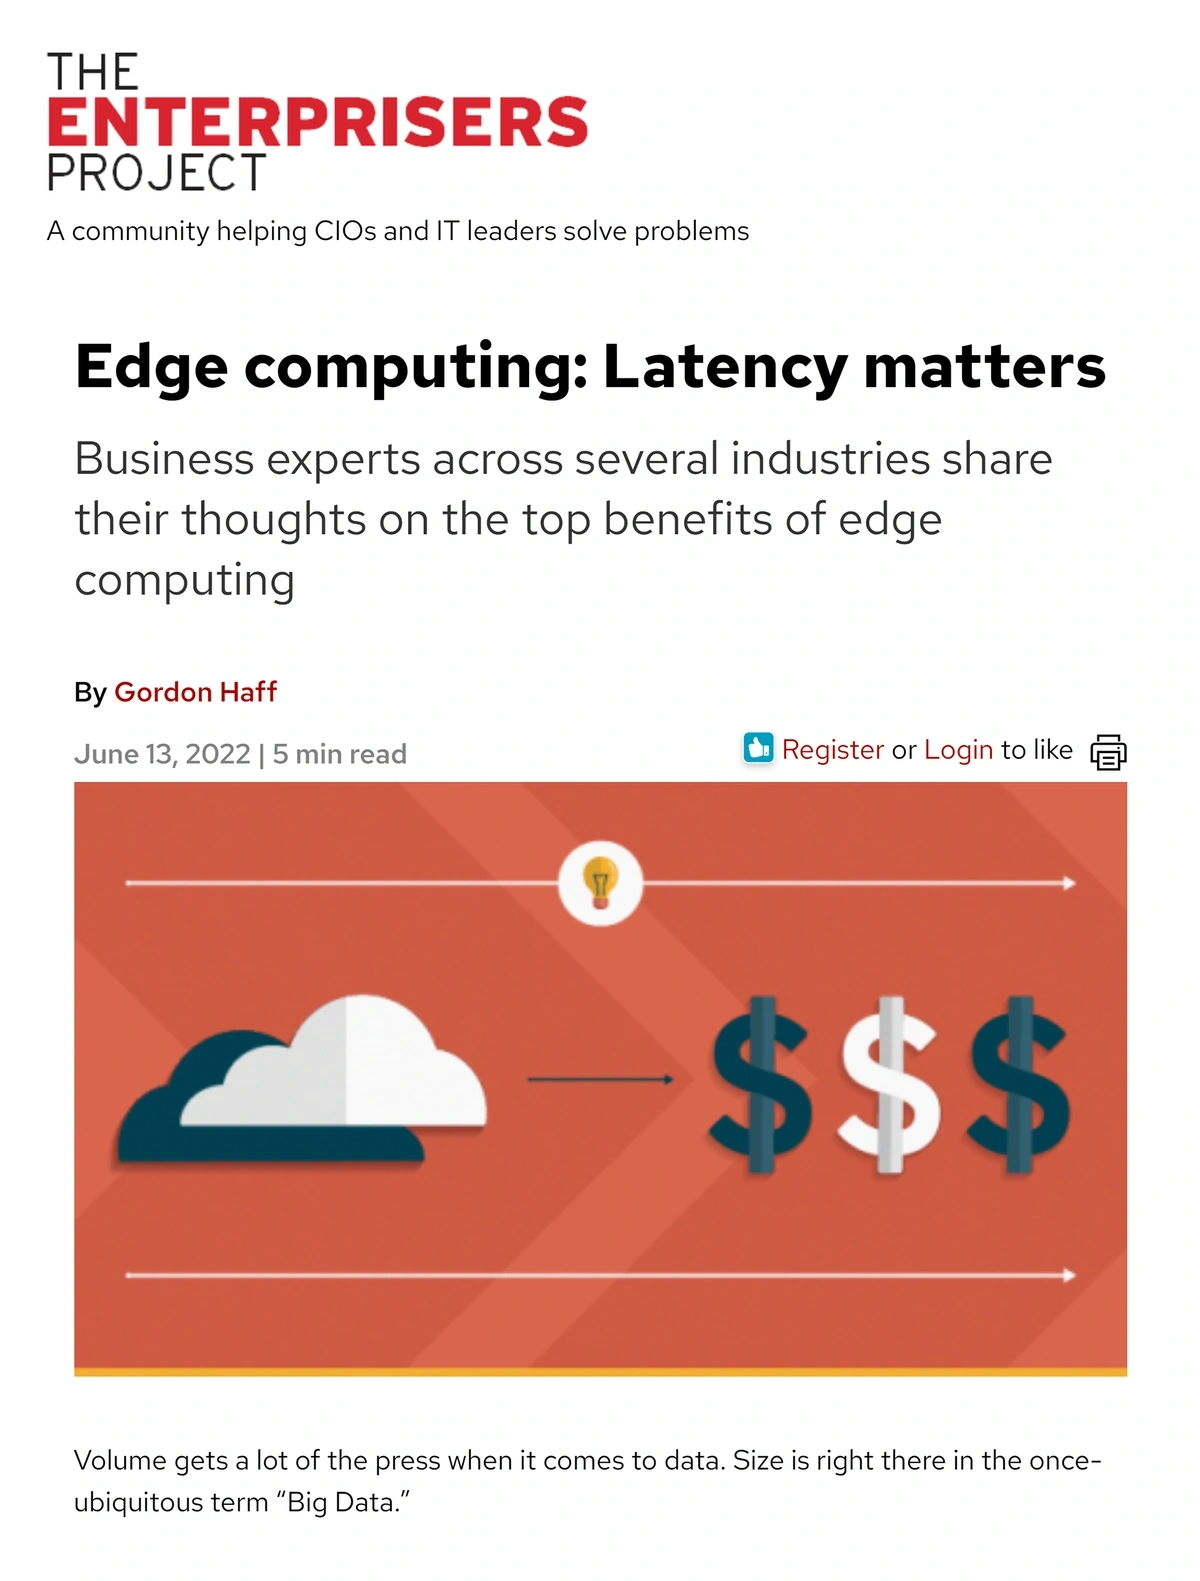 edge-computing-latency-matters-min.webp